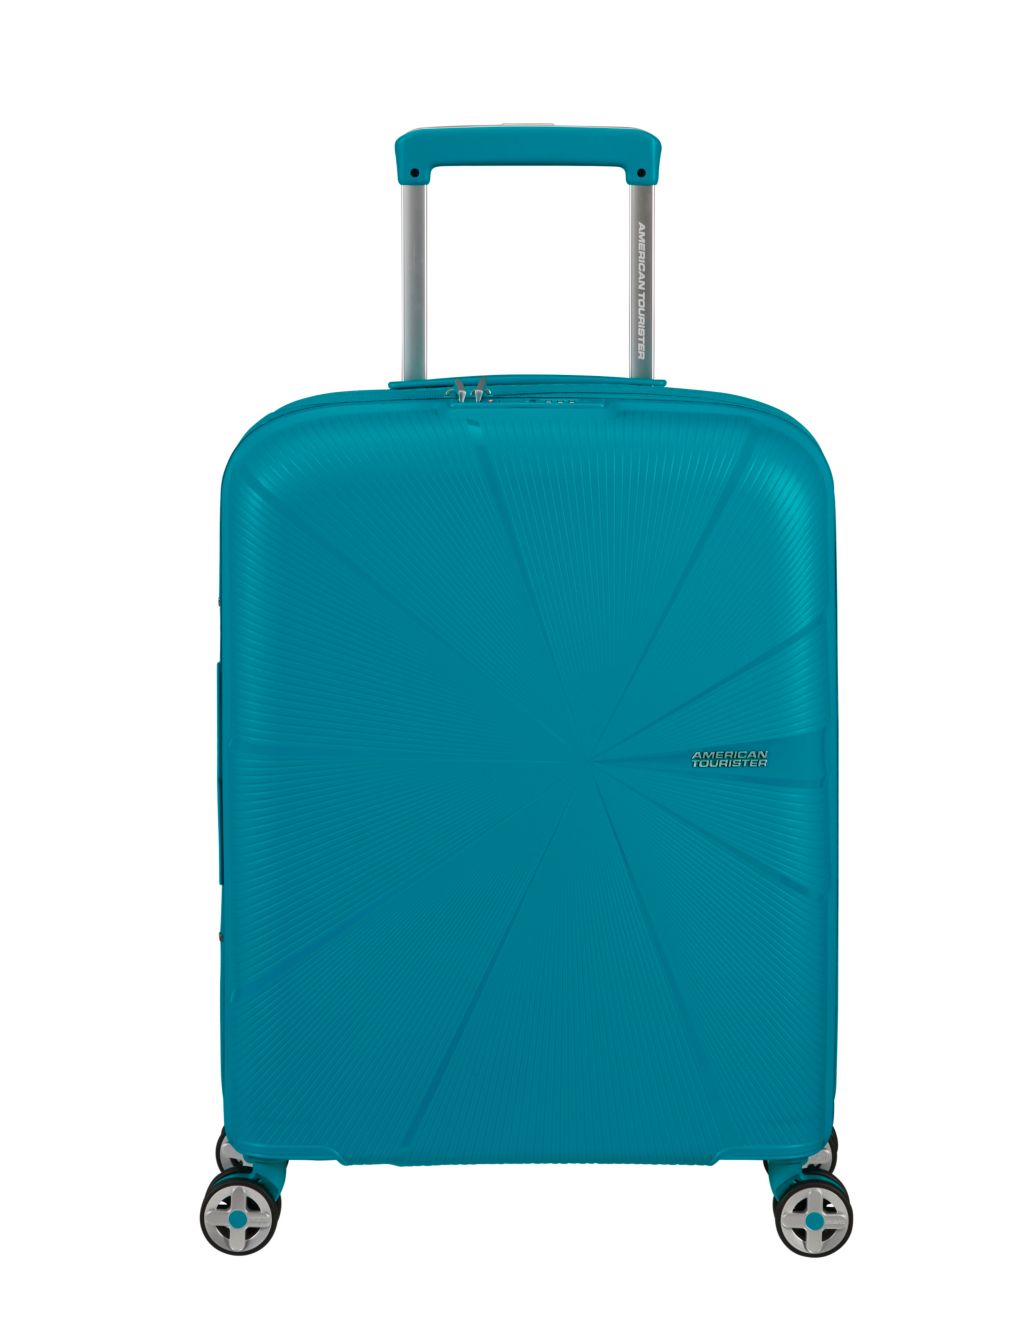 Starvibe 4 Wheel Hard Shell Cabin Suitcase image 1